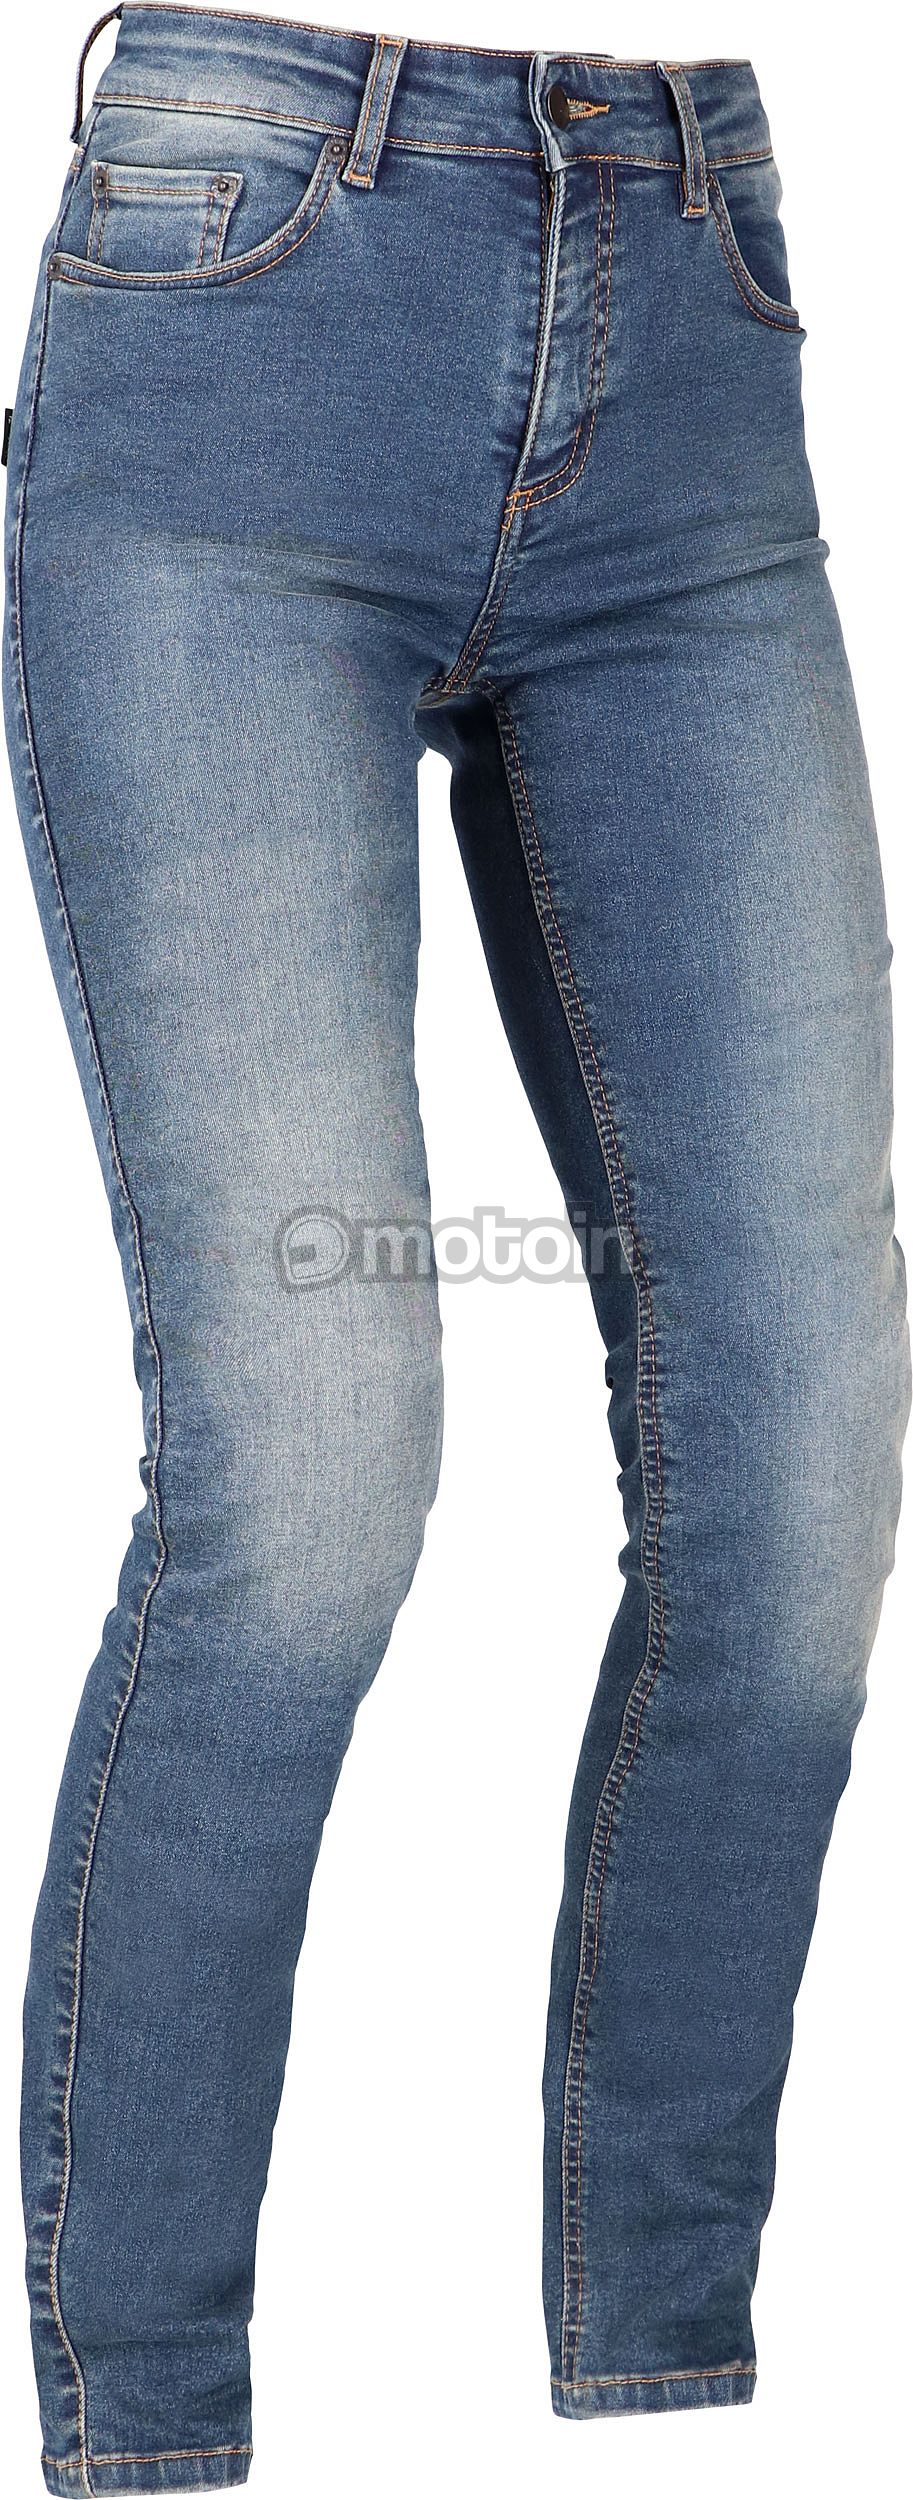 Richa Original 2 Slim-Fit, jeans donna